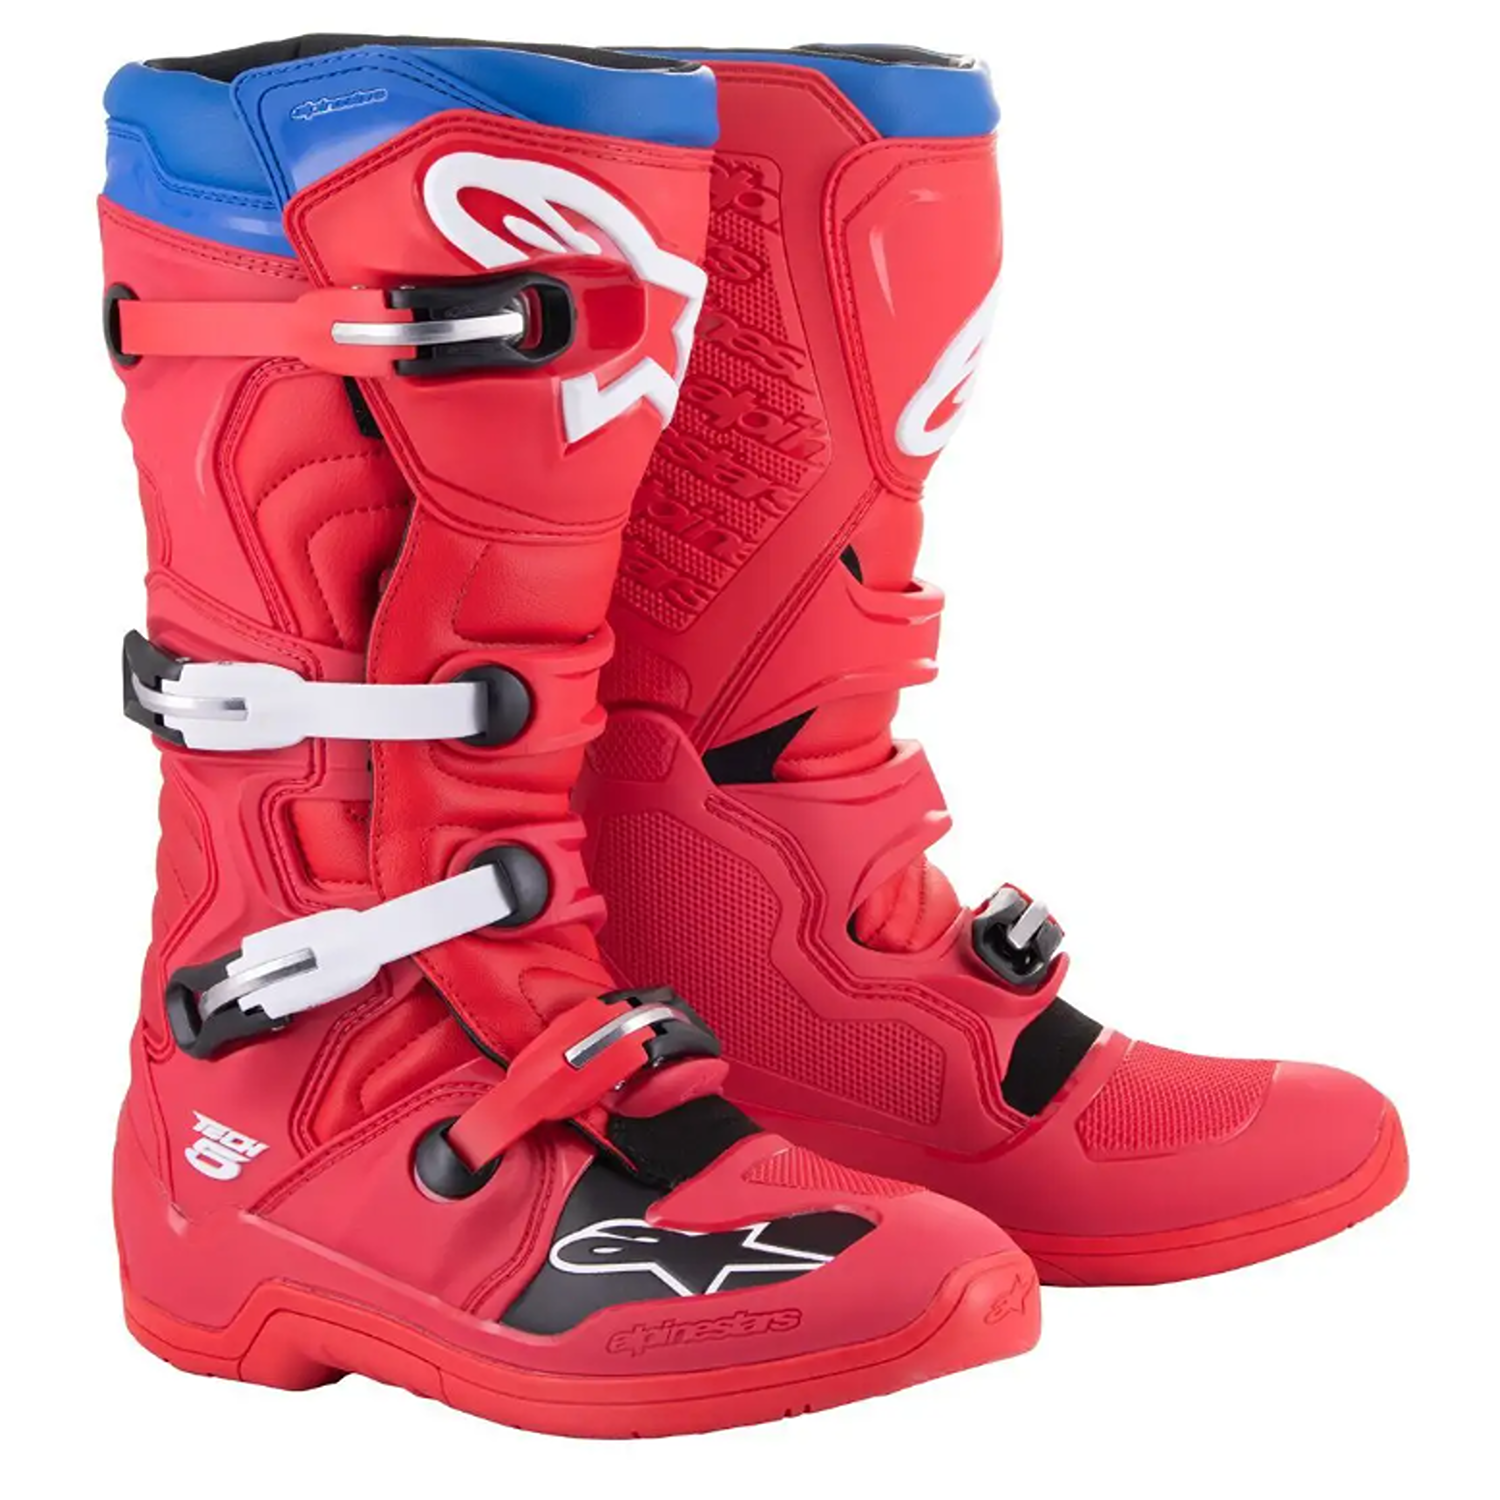 Image of Alpinestars Tech 5 Boots Bright Red Dark Red Blue Size US 12 EN